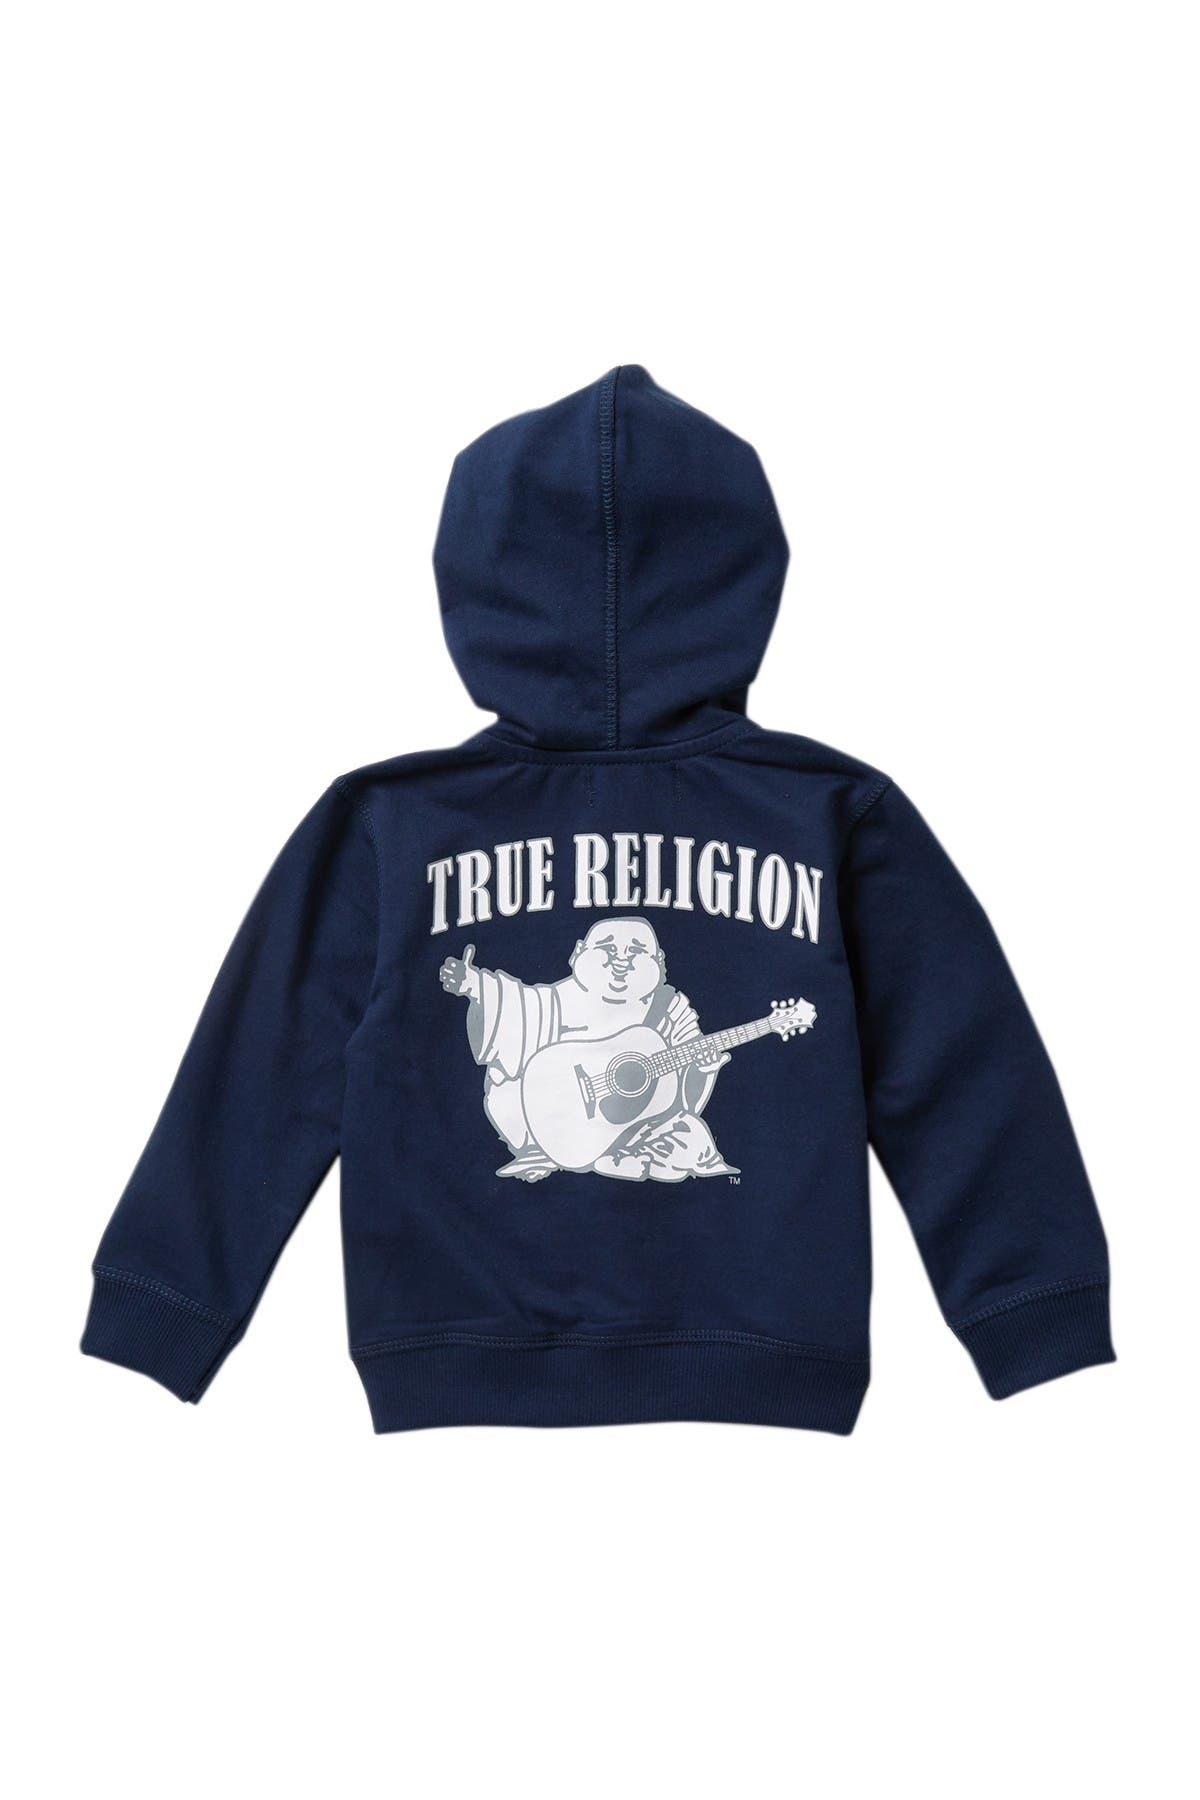 true religion jacket and sweatpants